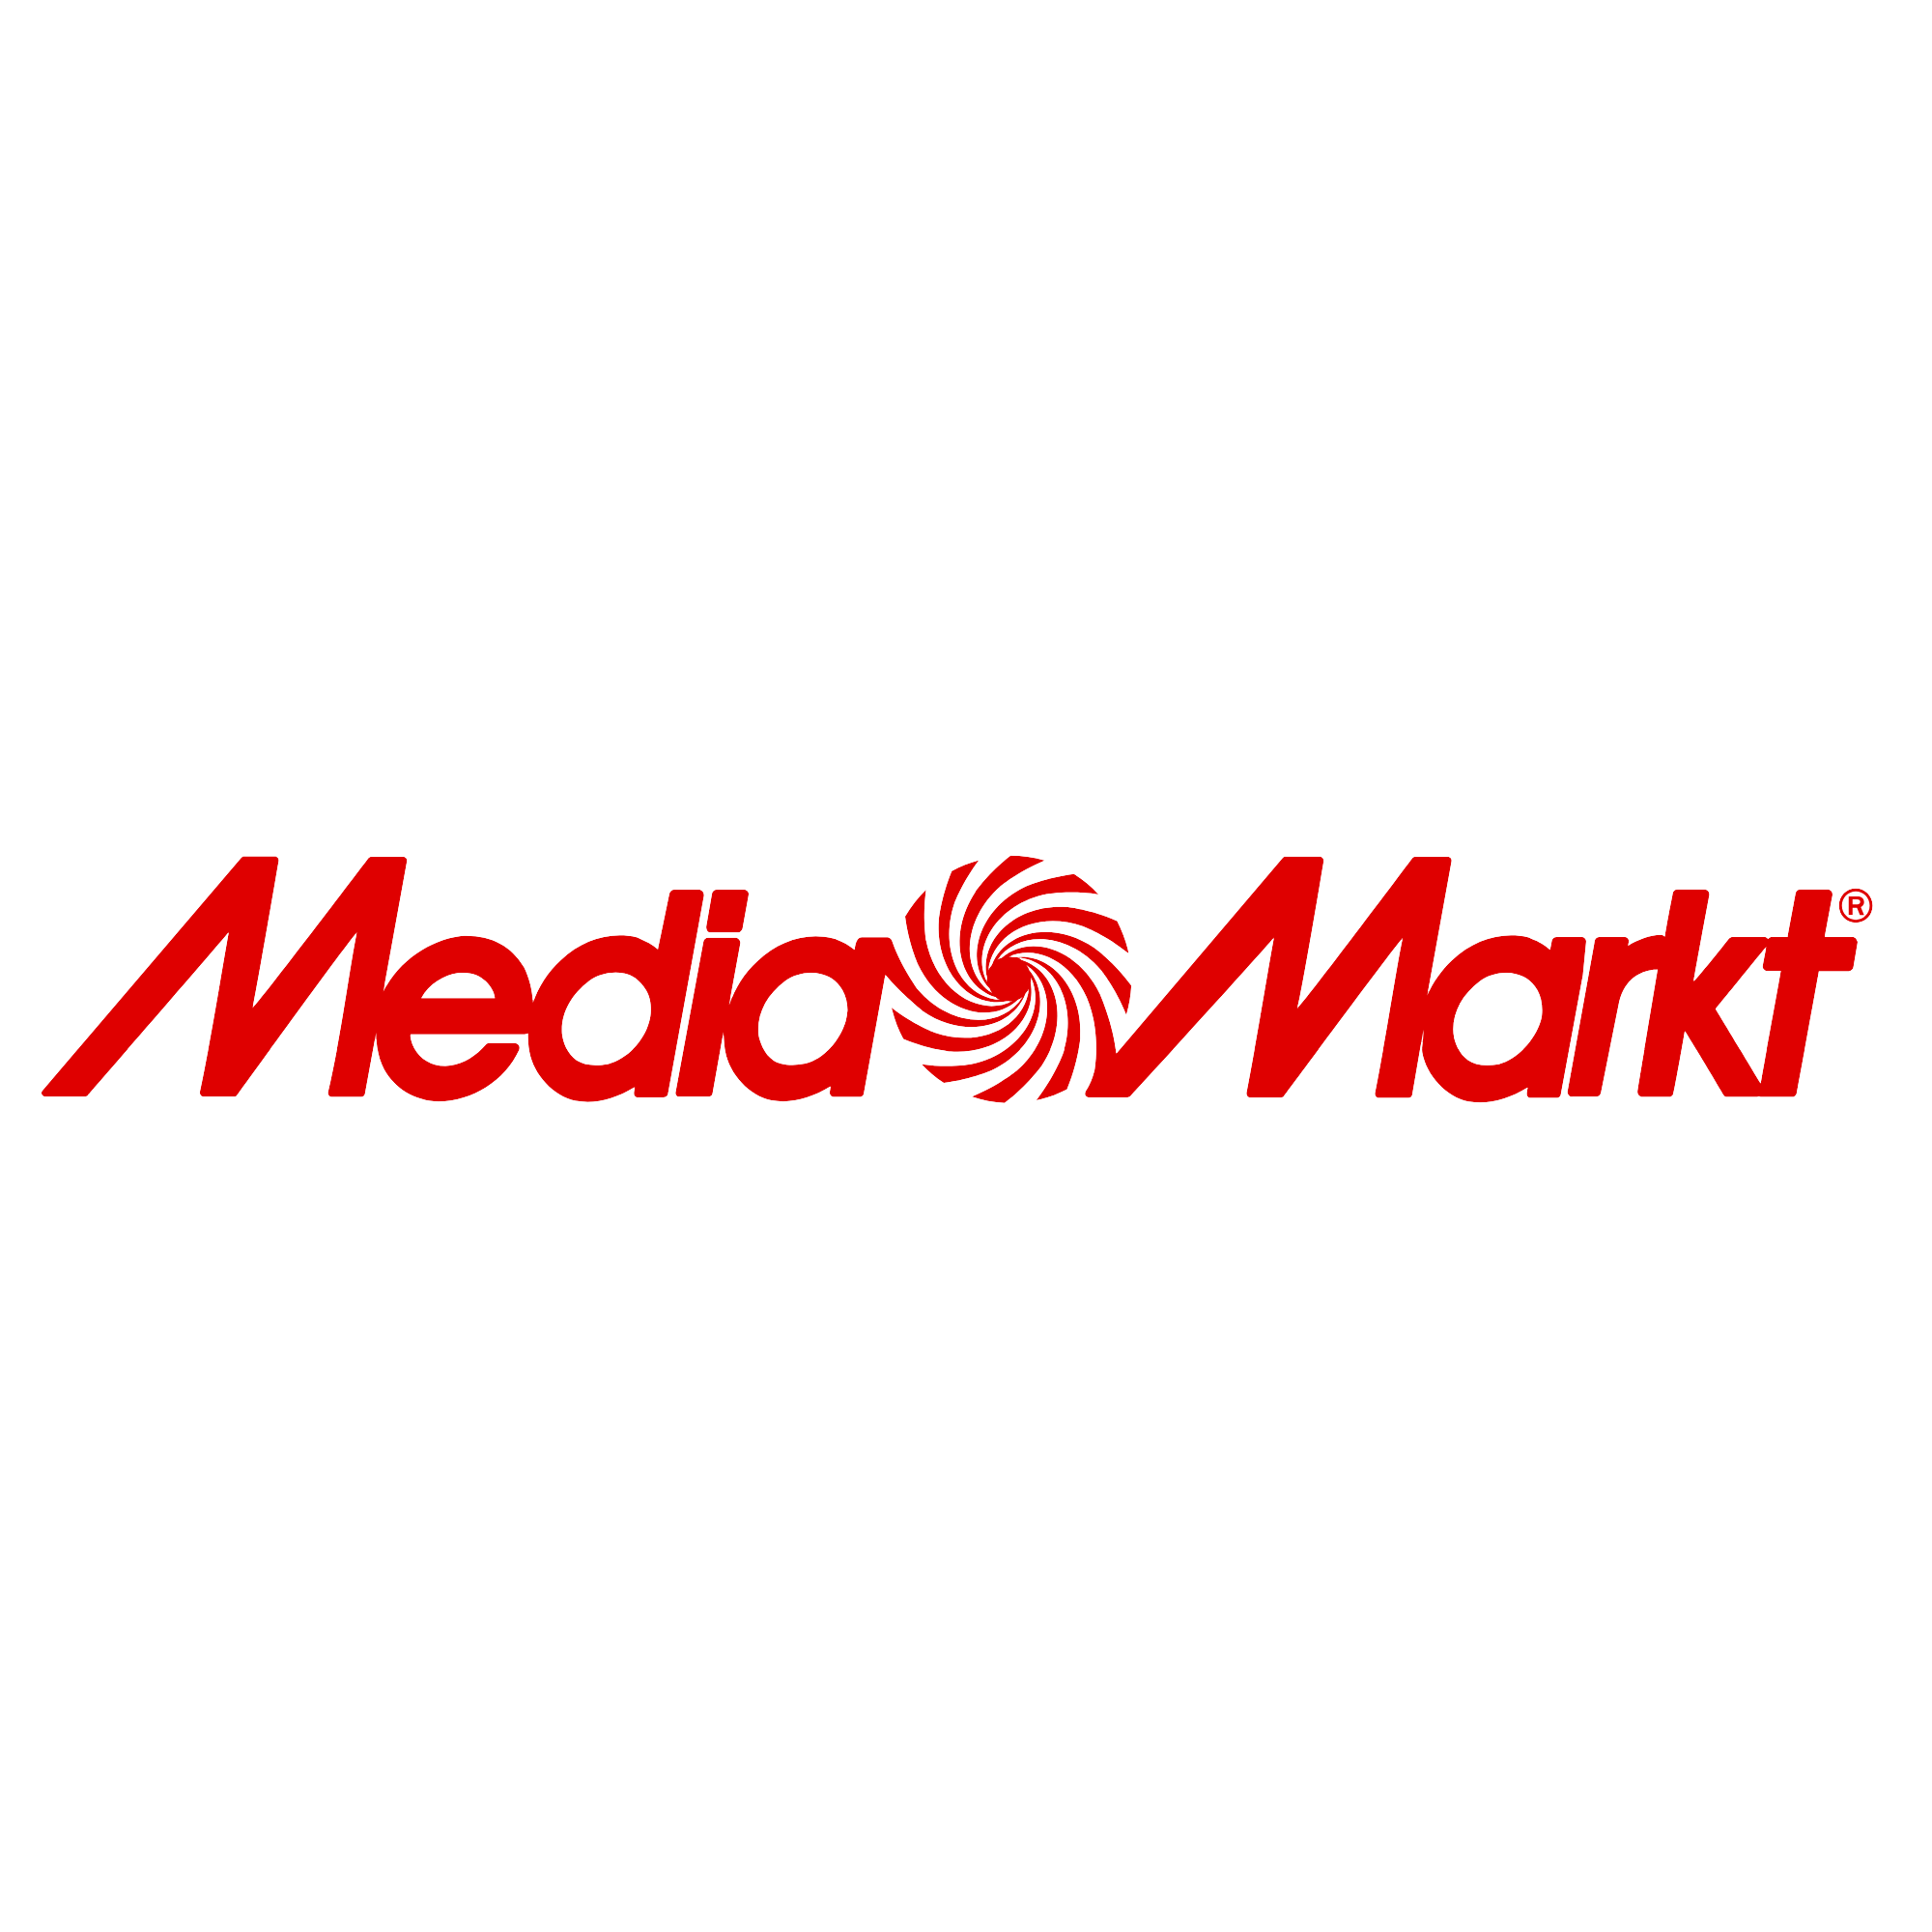 Сайт медиа маркет. MEDIAMARKT Германия. Медиа логотип. Media Markt logo. Mix Markt логотип.